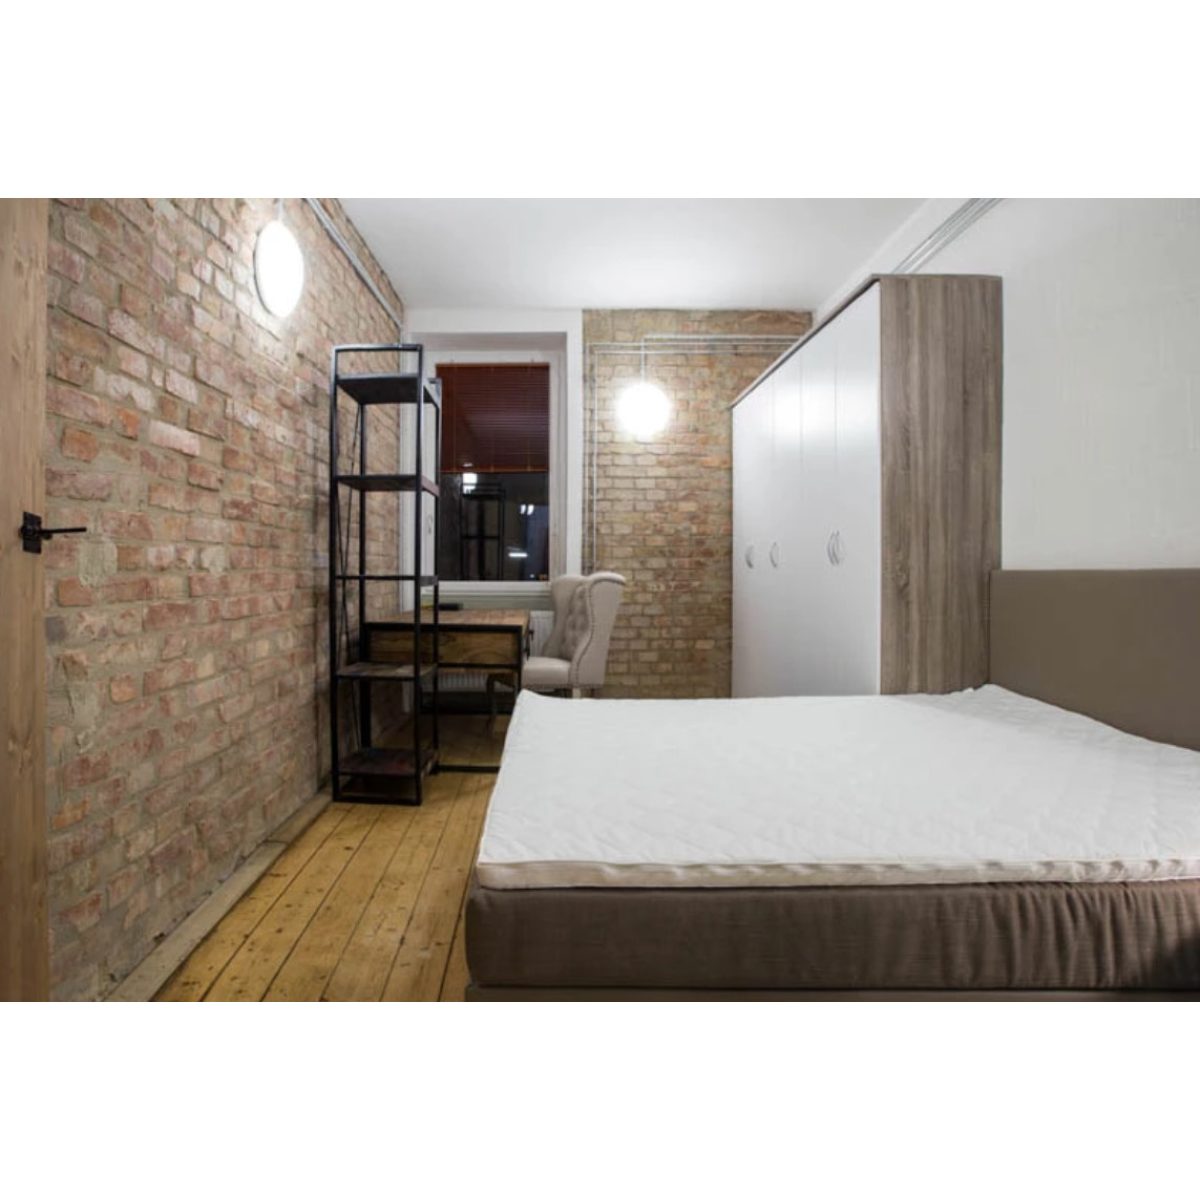 Breathtaking LUXURY Brickstone Style 2-bedroom student apartment 2